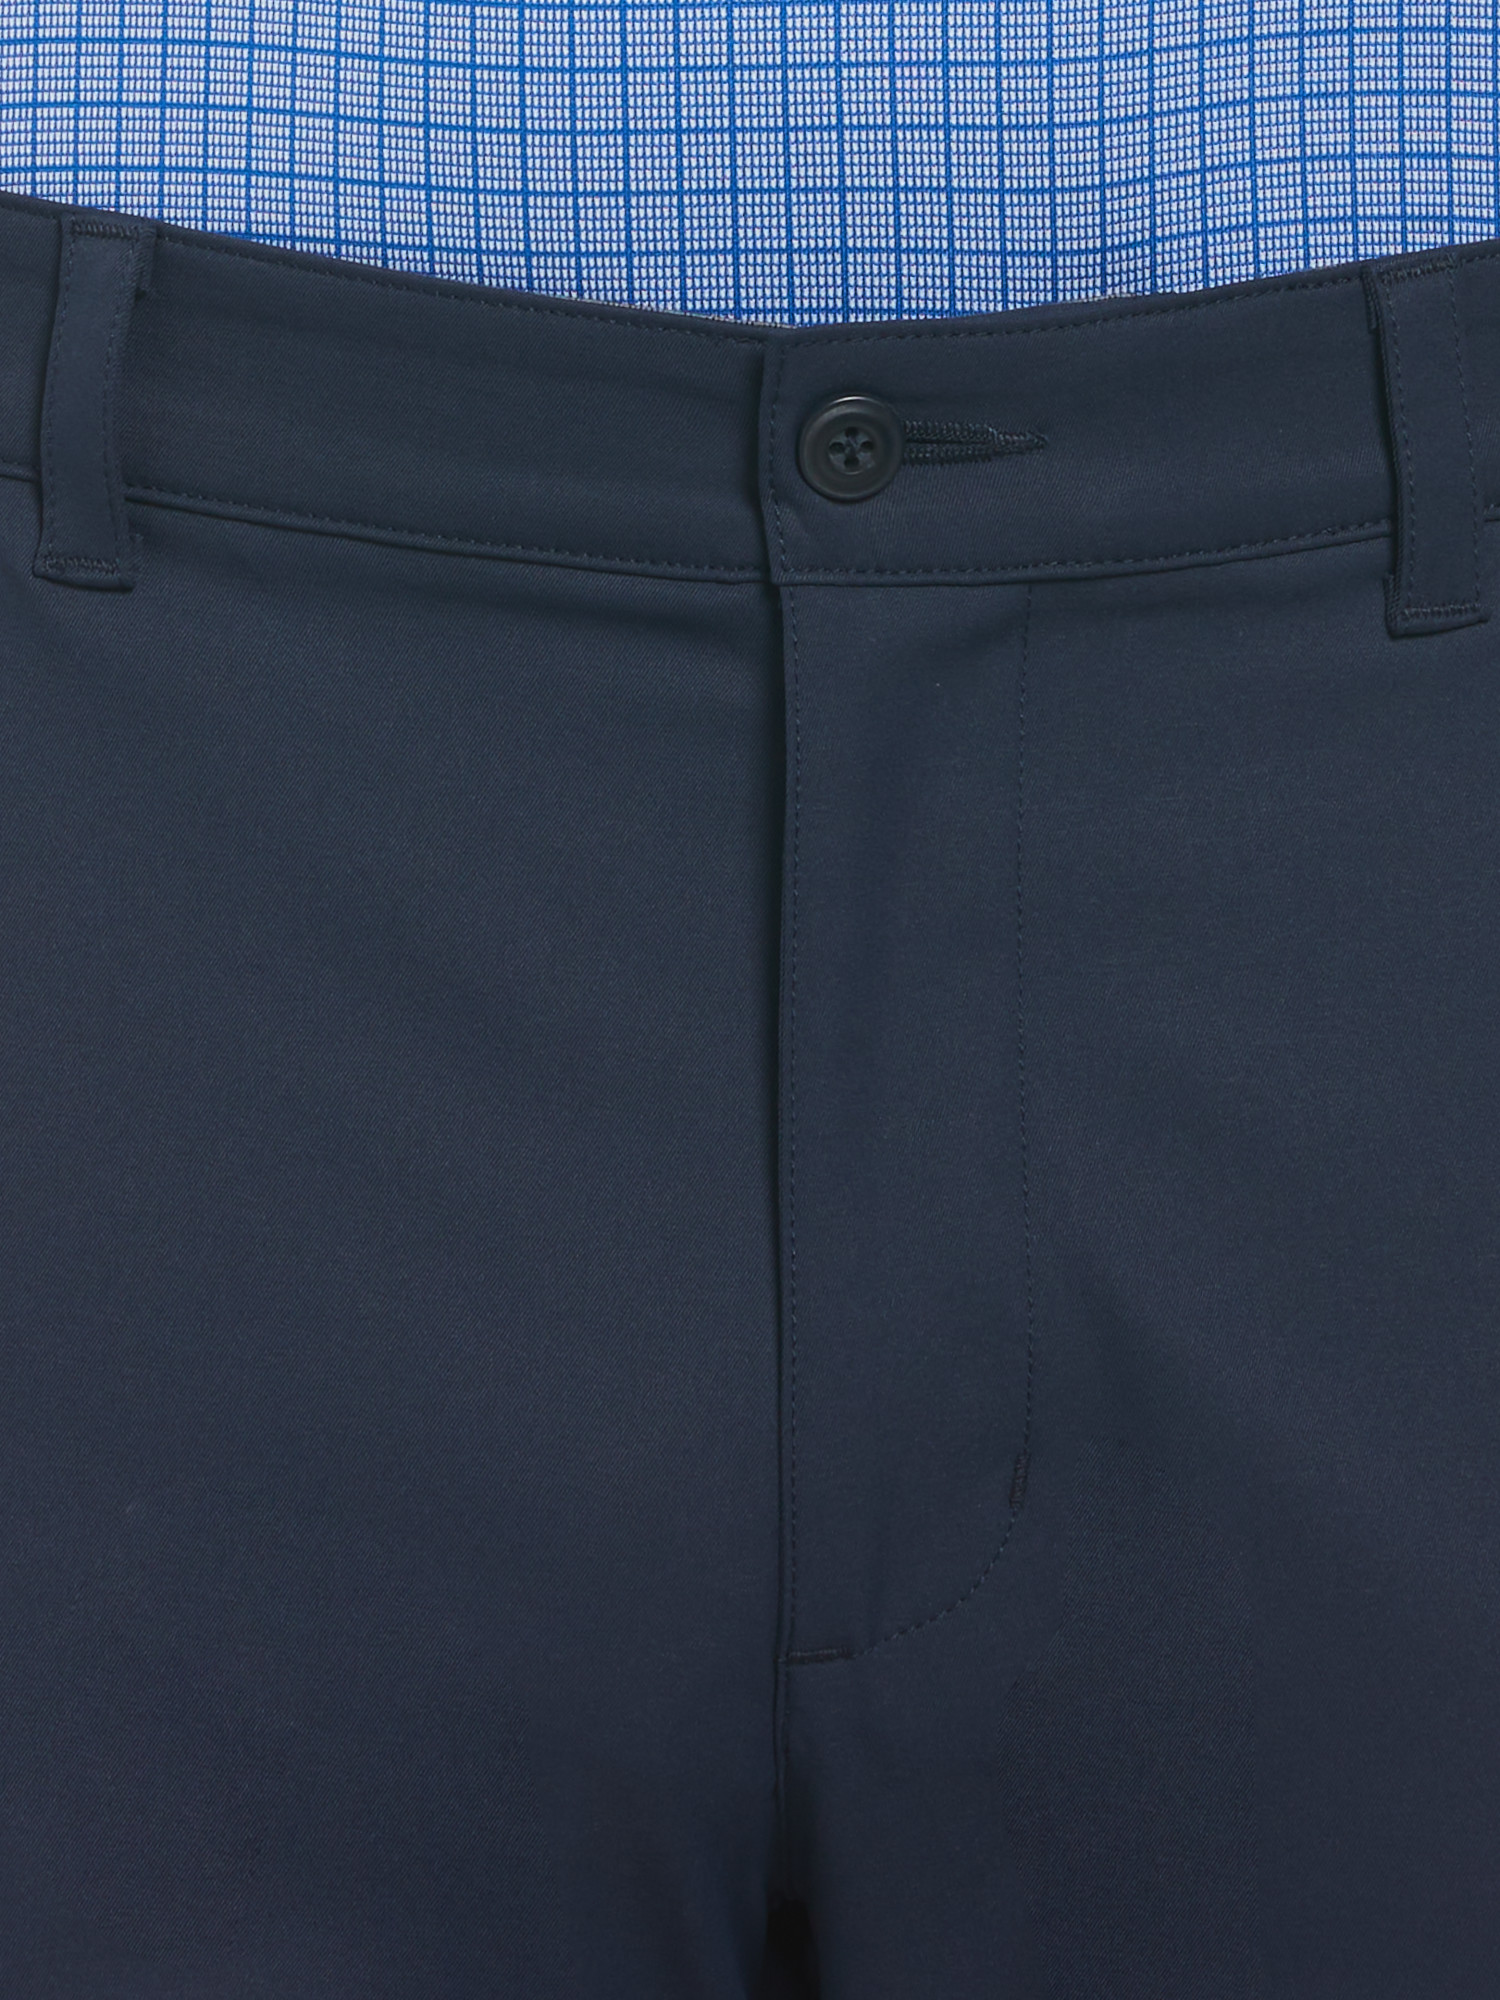 Ben Hogan Men's Flex 4-Way Stretch Golf Pants with Active Waistband, Sizes 30-50 - image 4 of 4